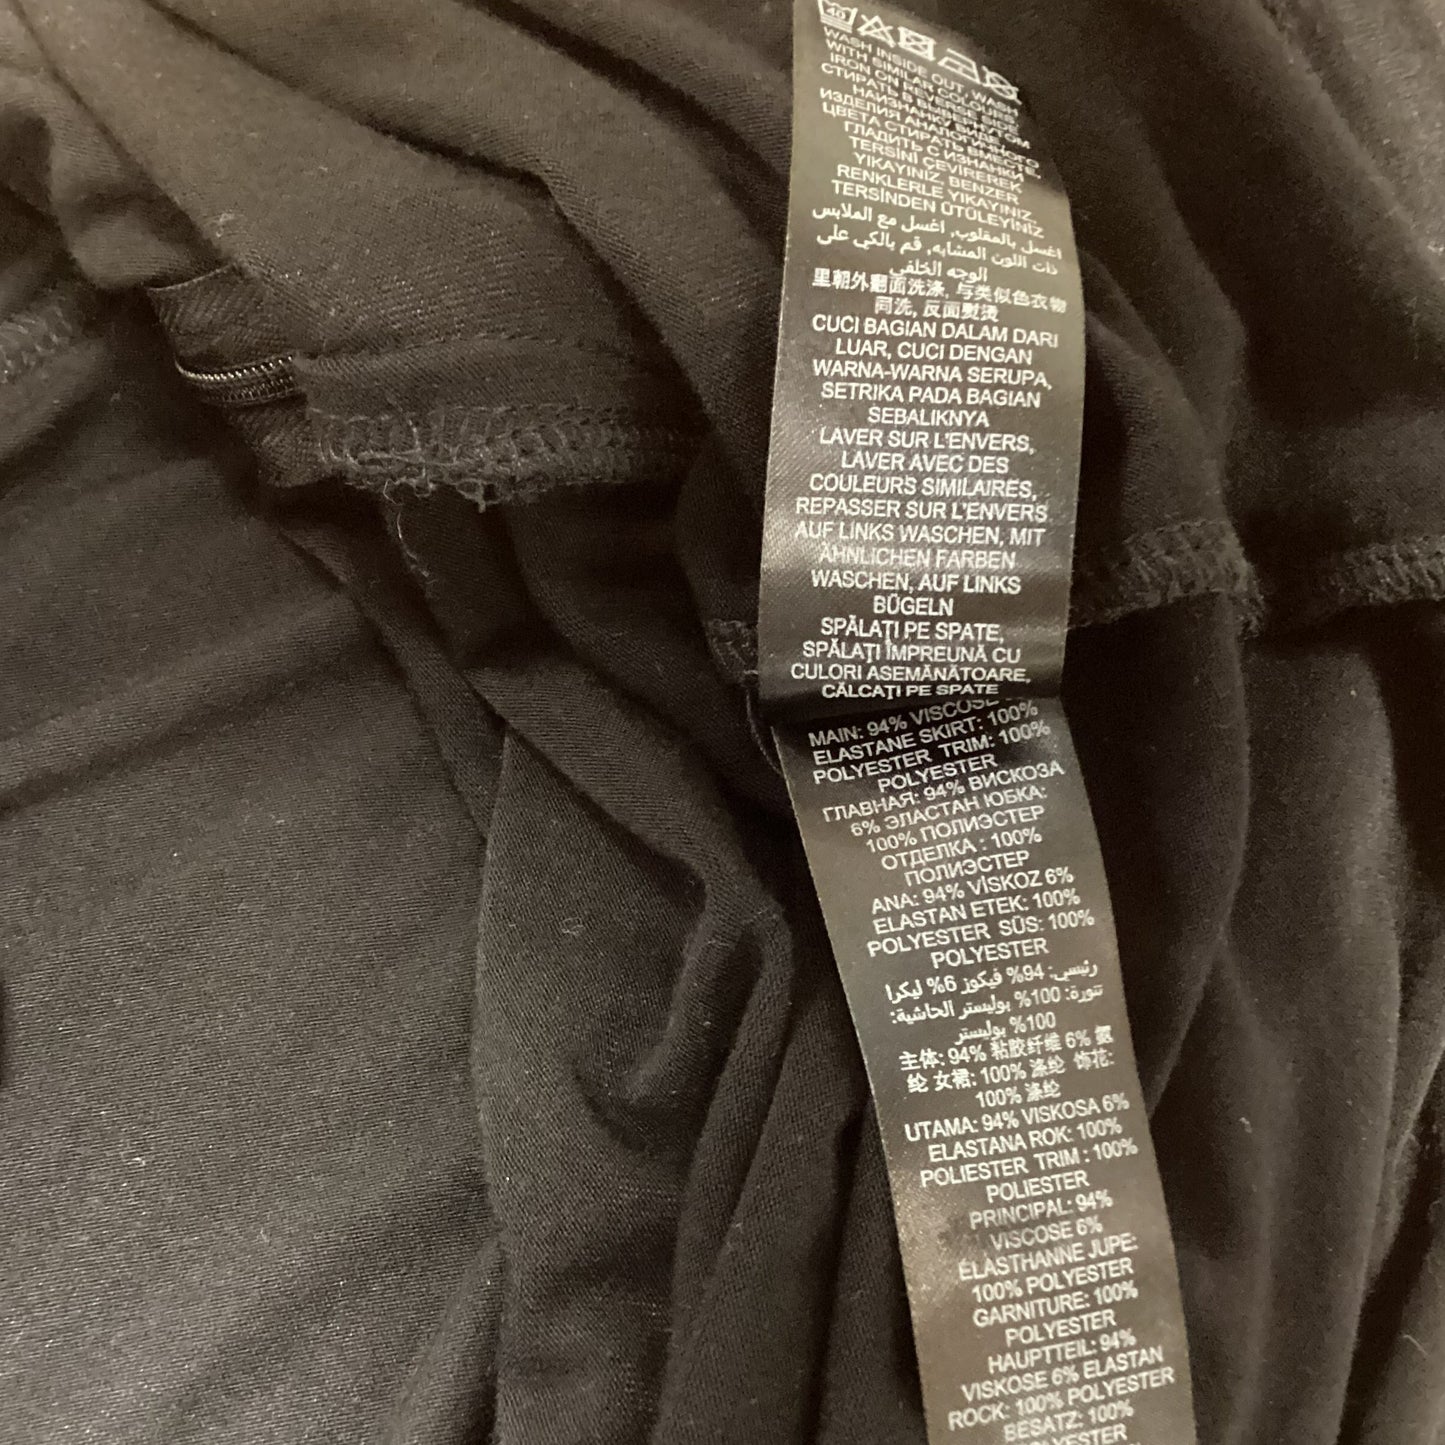 Rocha John Rocha Black Long-Sleeved Dress w/Plisse Skirt & Button Detail Size 8